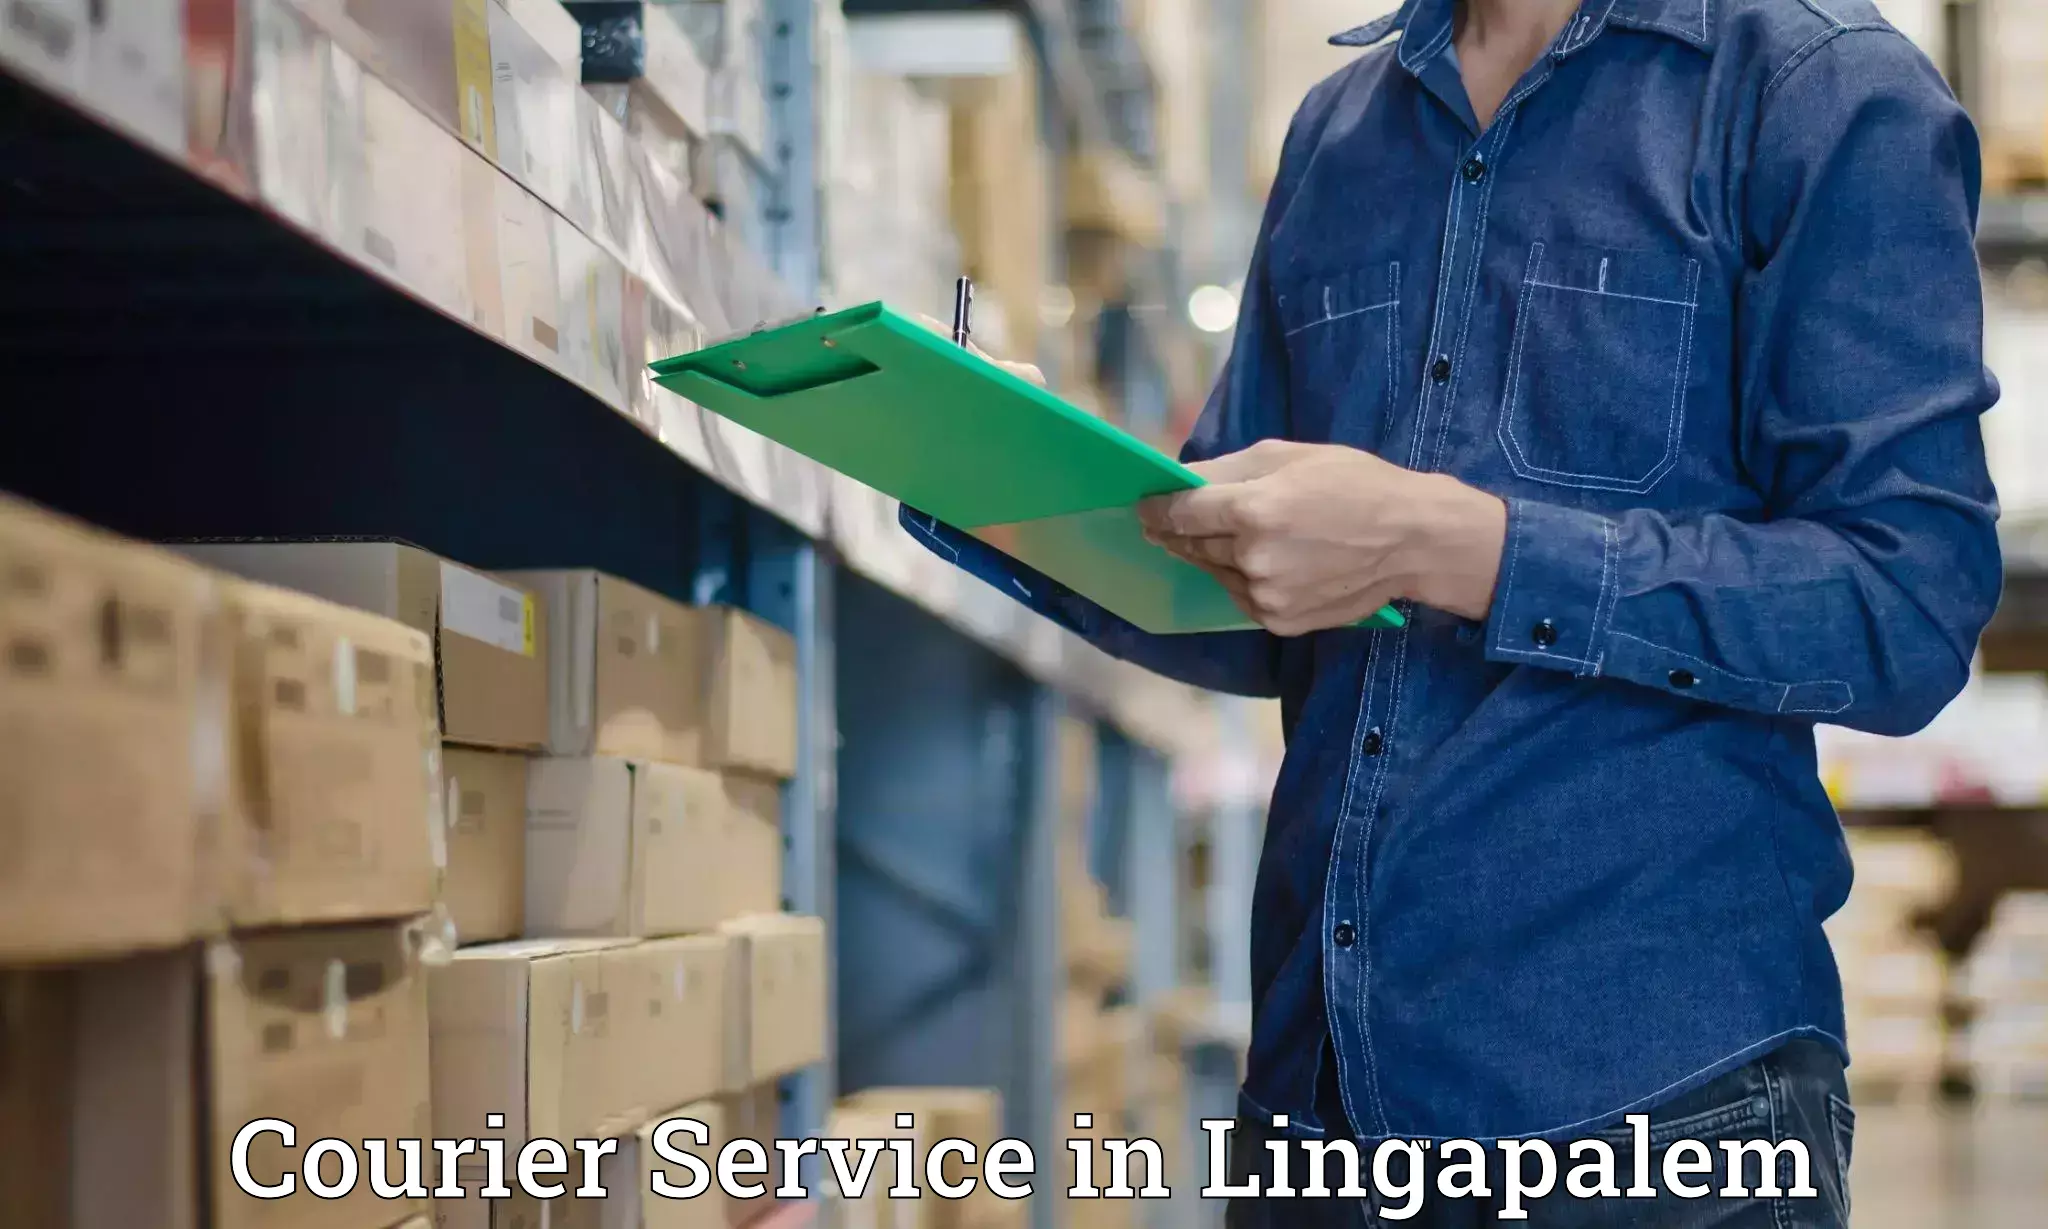 Innovative logistics solutions in Lingapalem